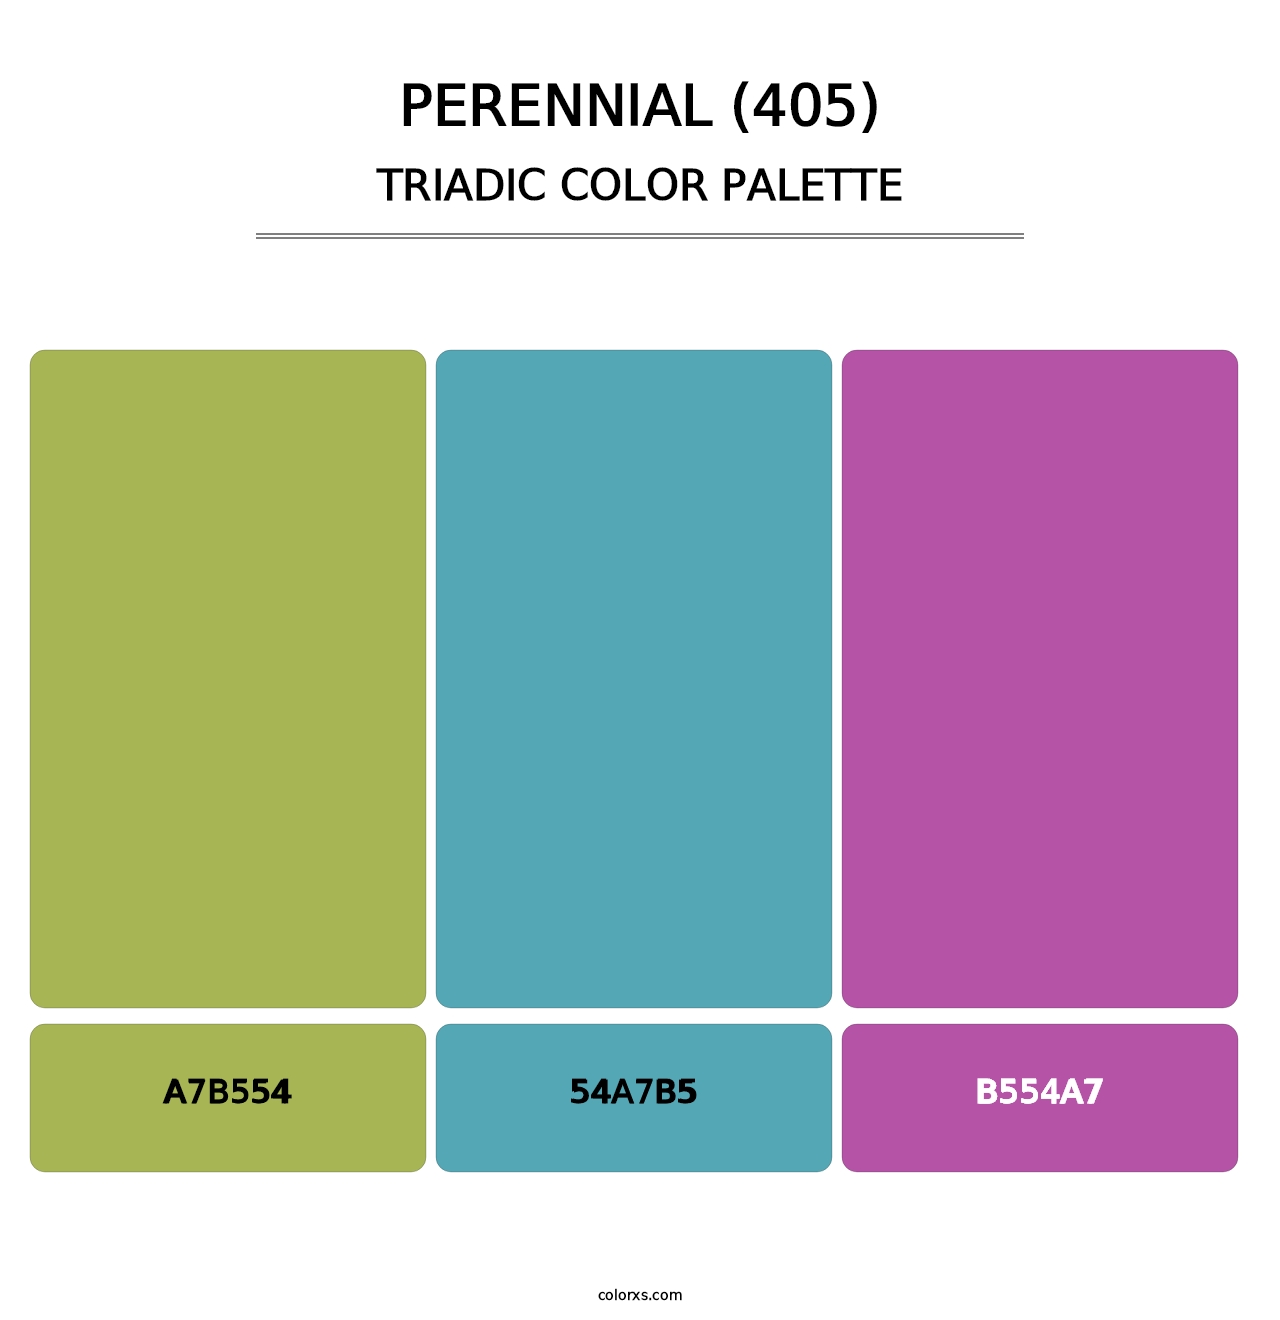 Perennial (405) - Triadic Color Palette